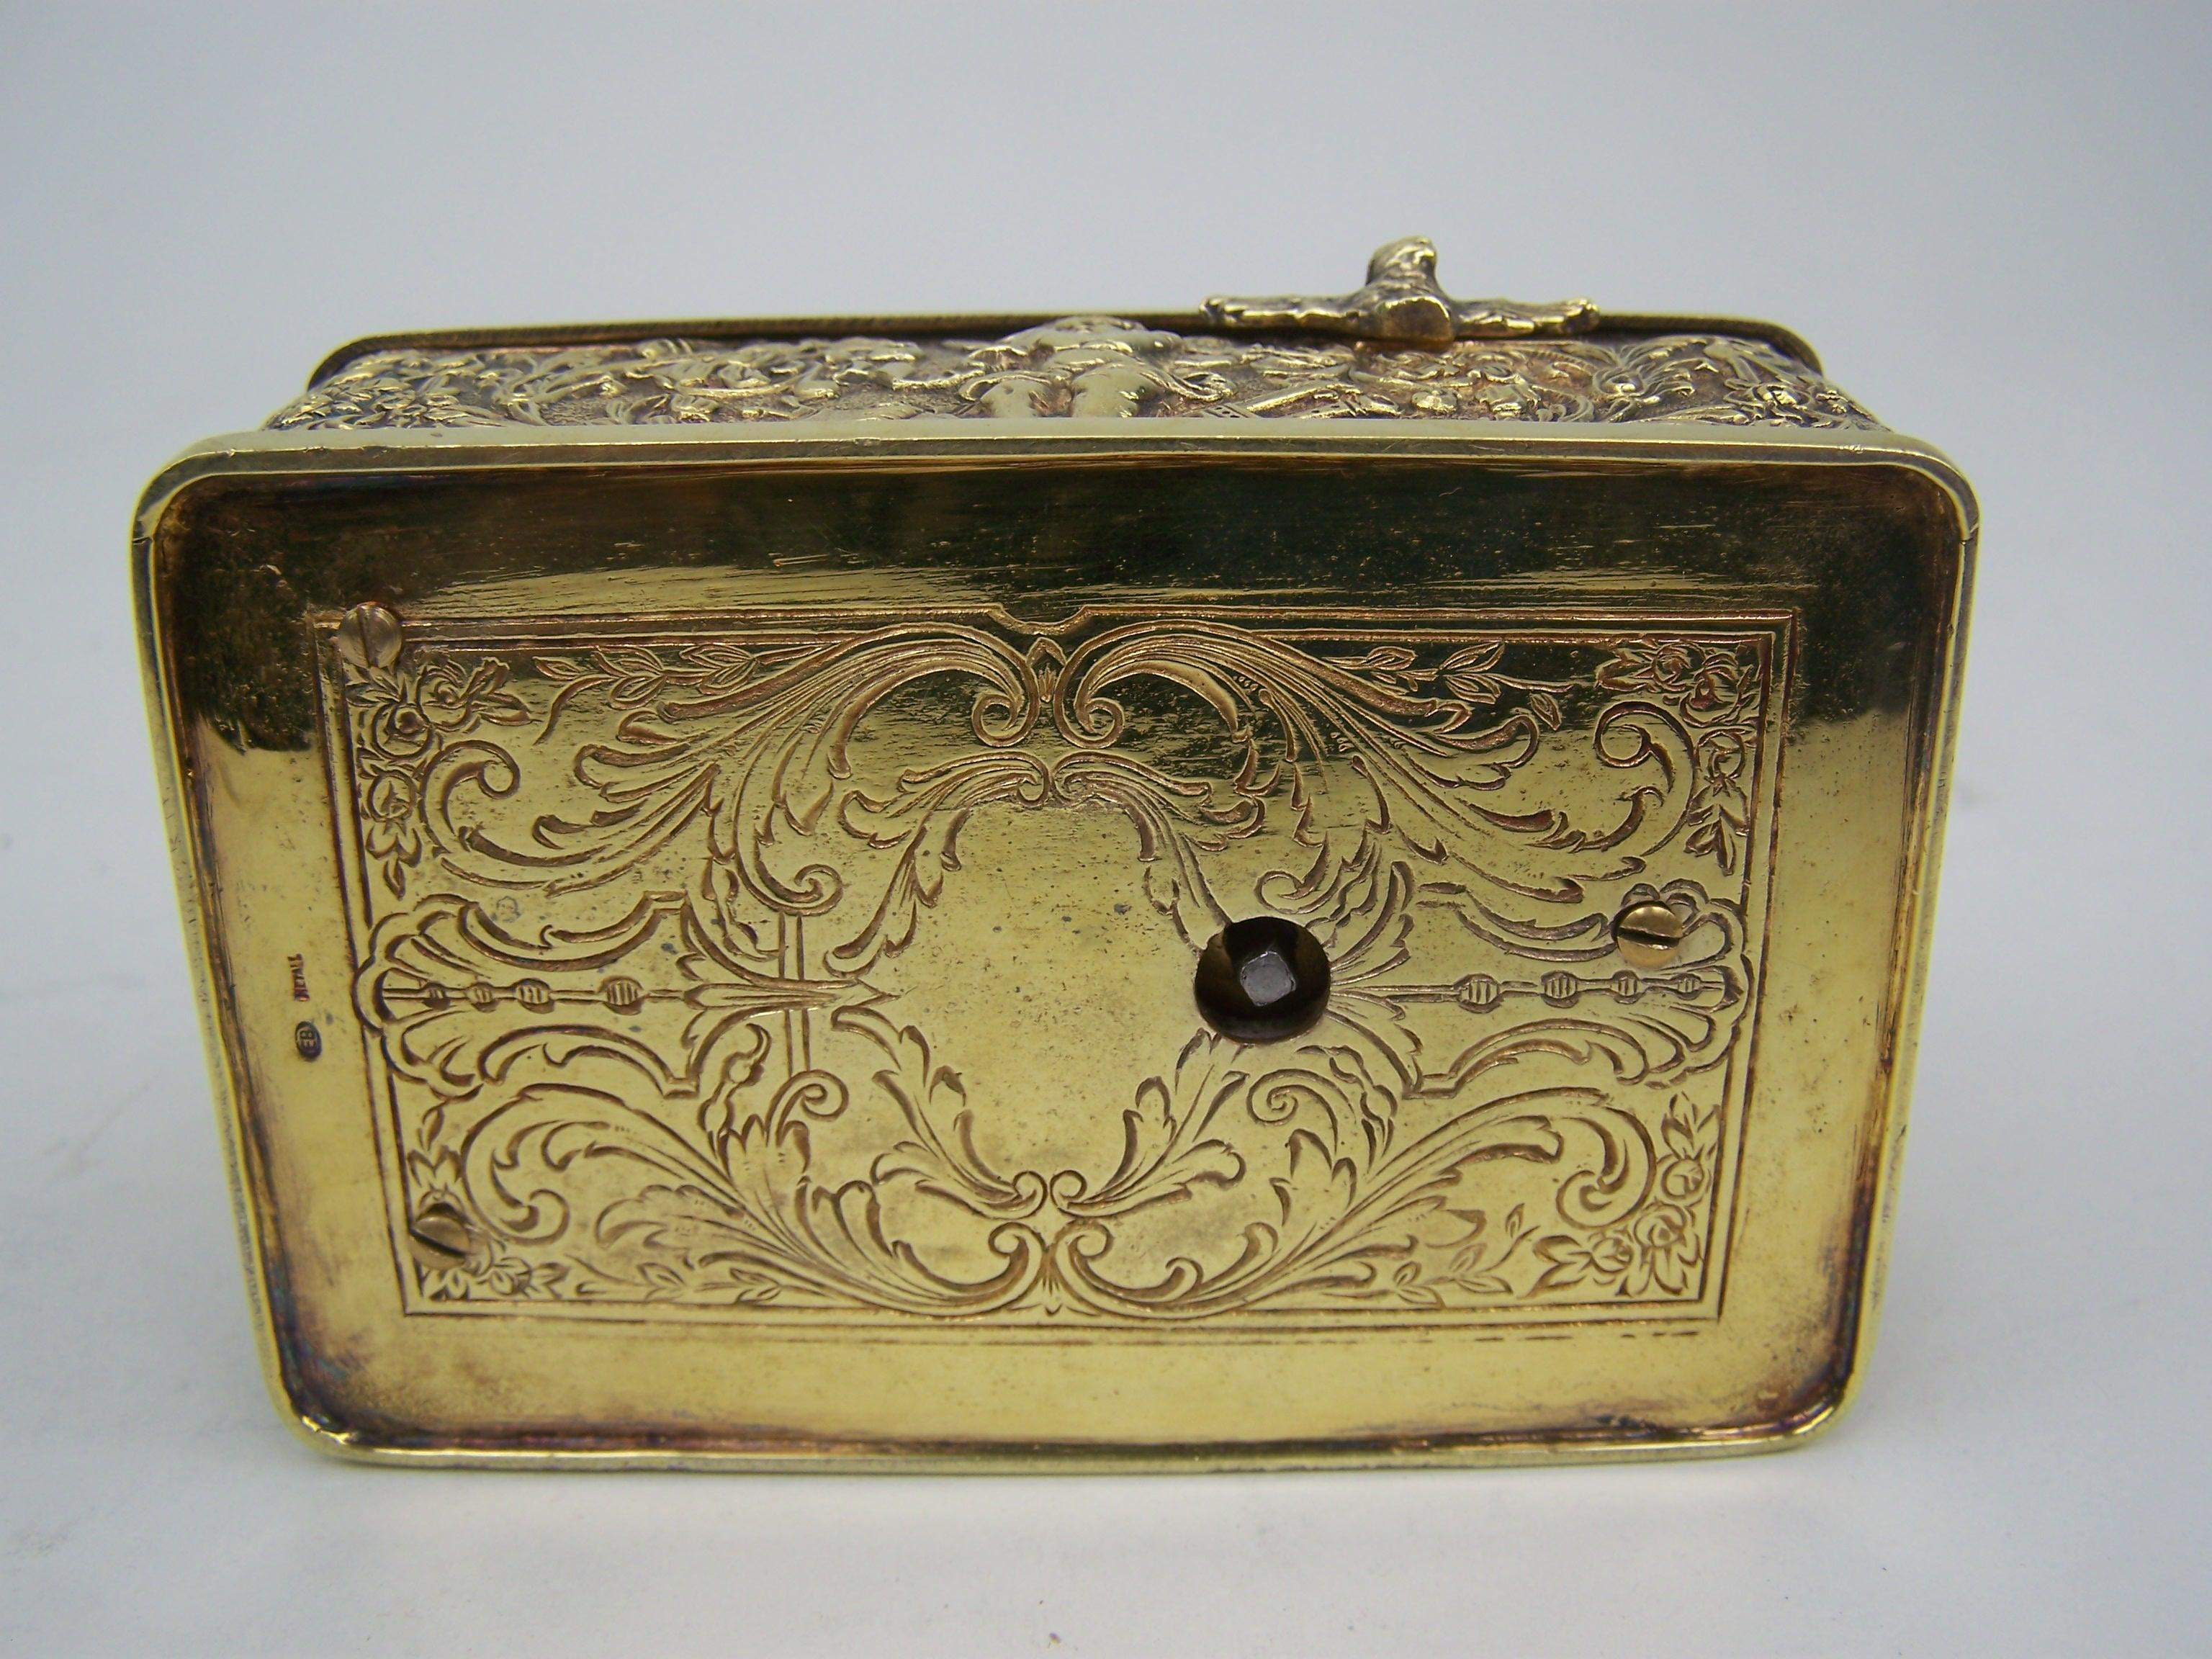 German Singing bird box by K Griesbaum in guilded case